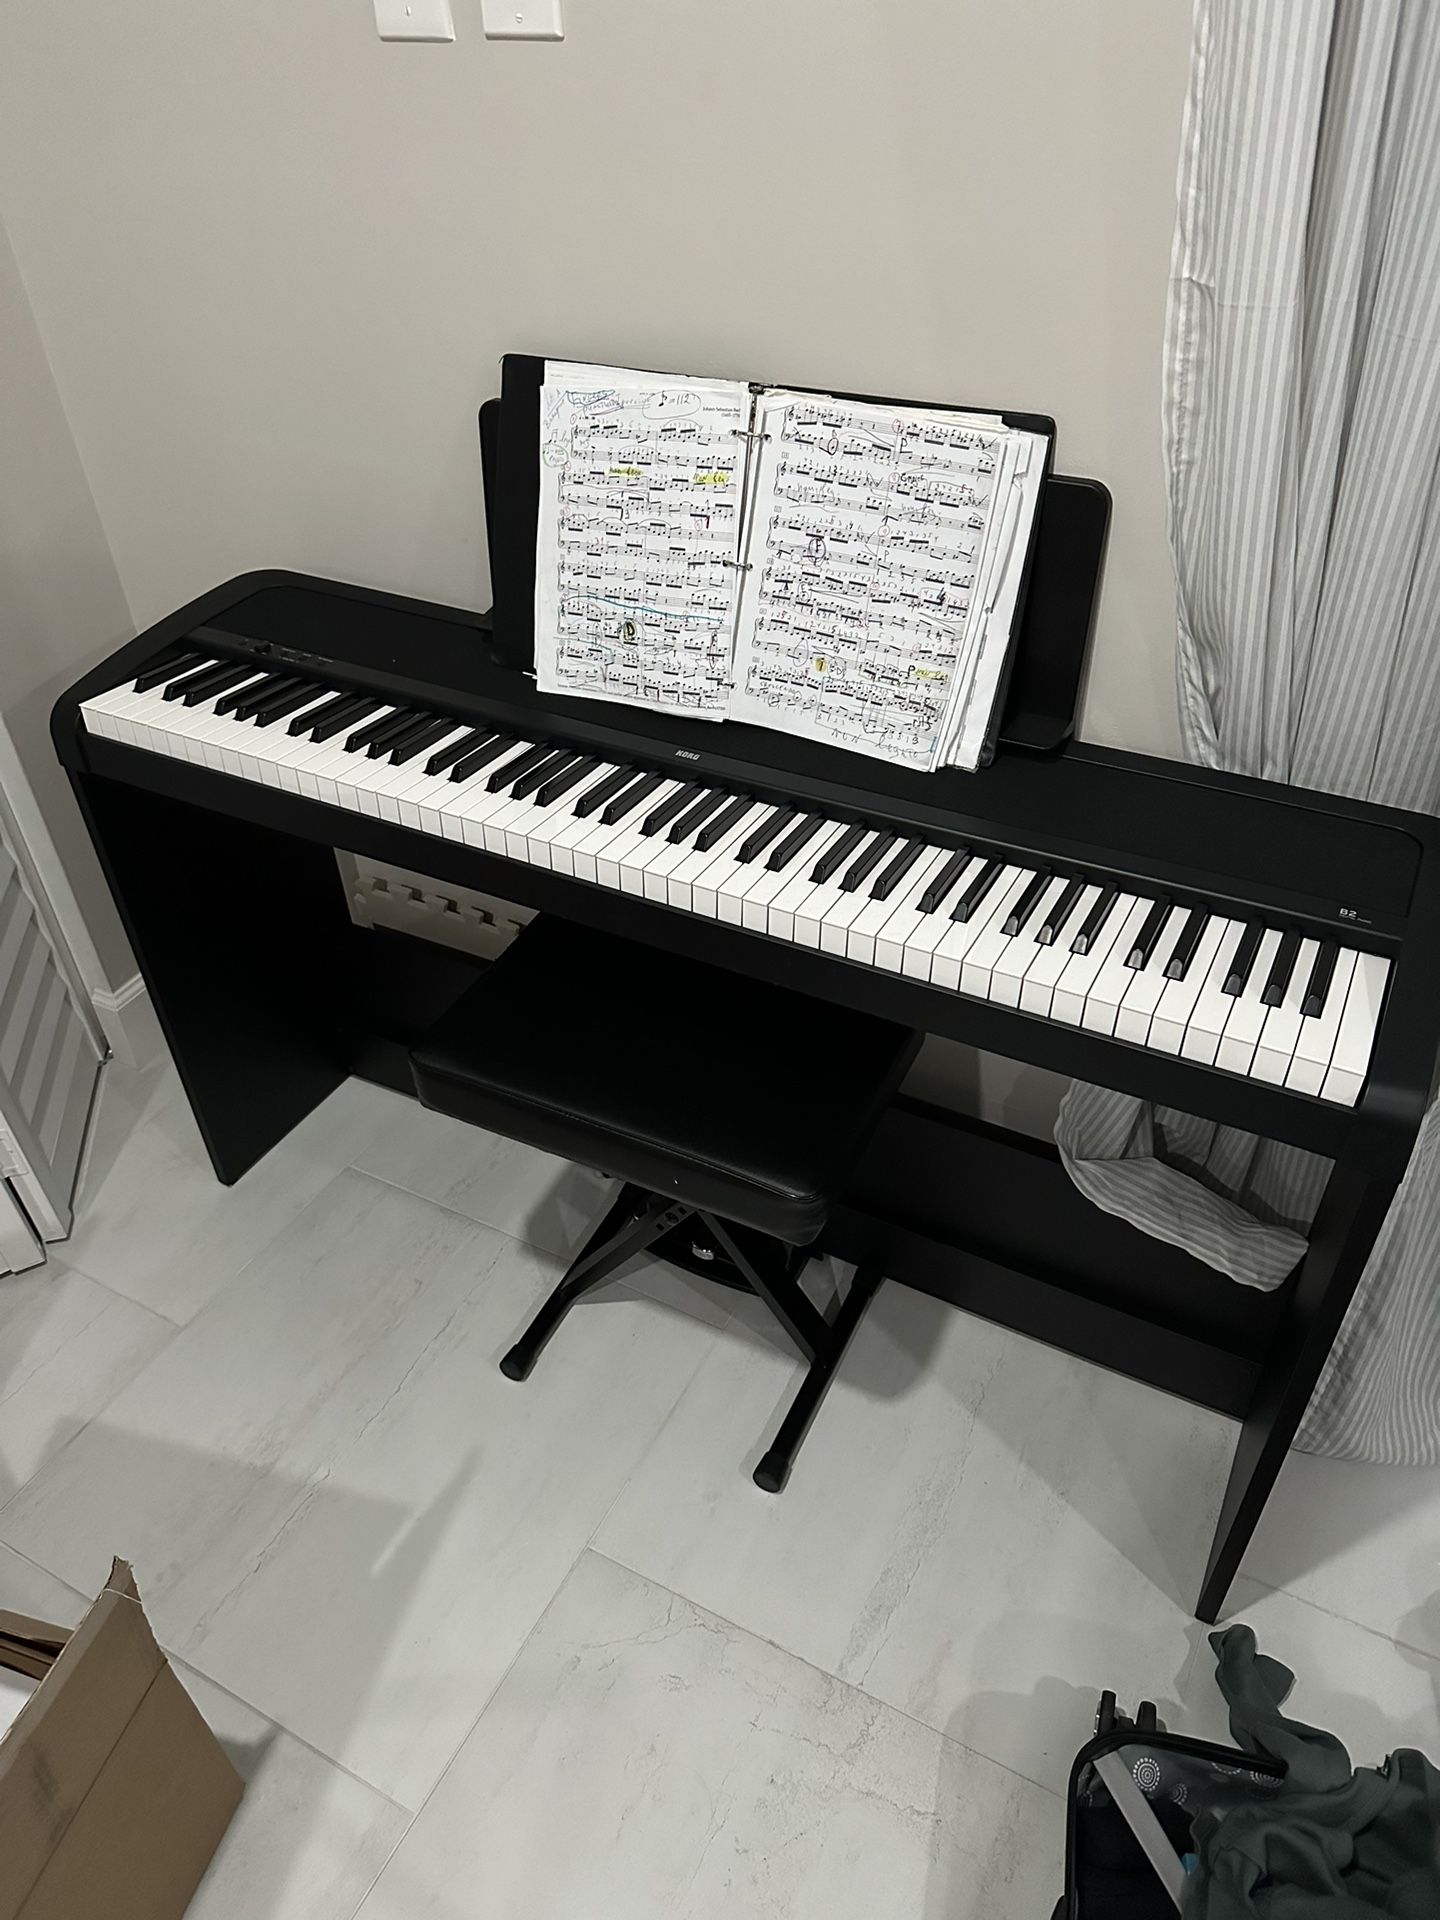 Korg B2SP Digital Piano (Black)